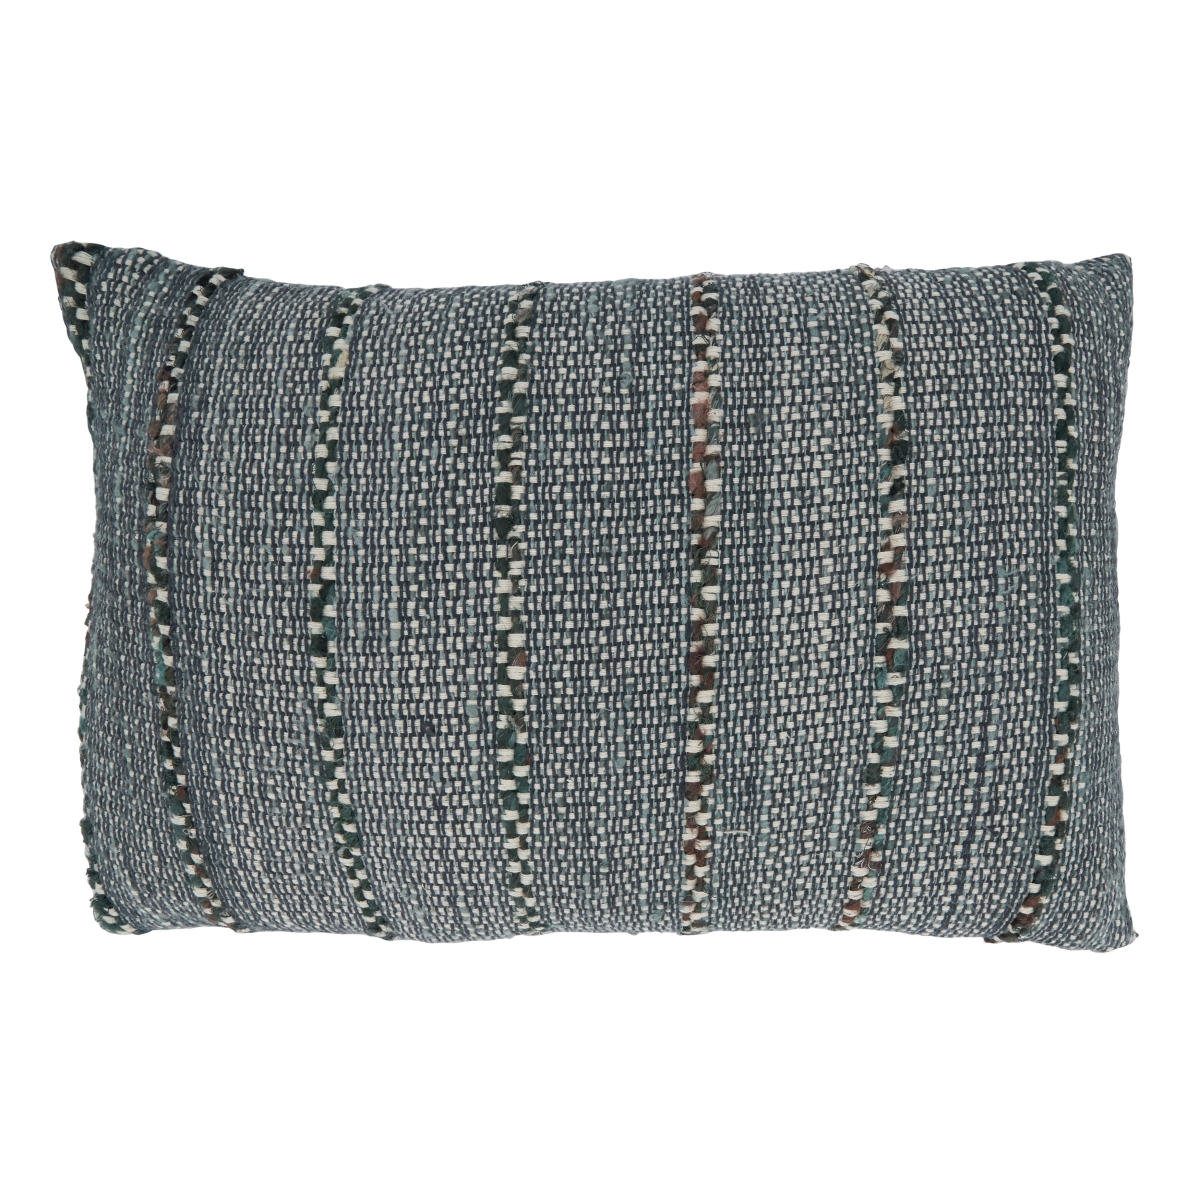 3084.BL1624BC 16 x 24 in. Striped Oblong Cotton Pillow Cover, Black -  SARO